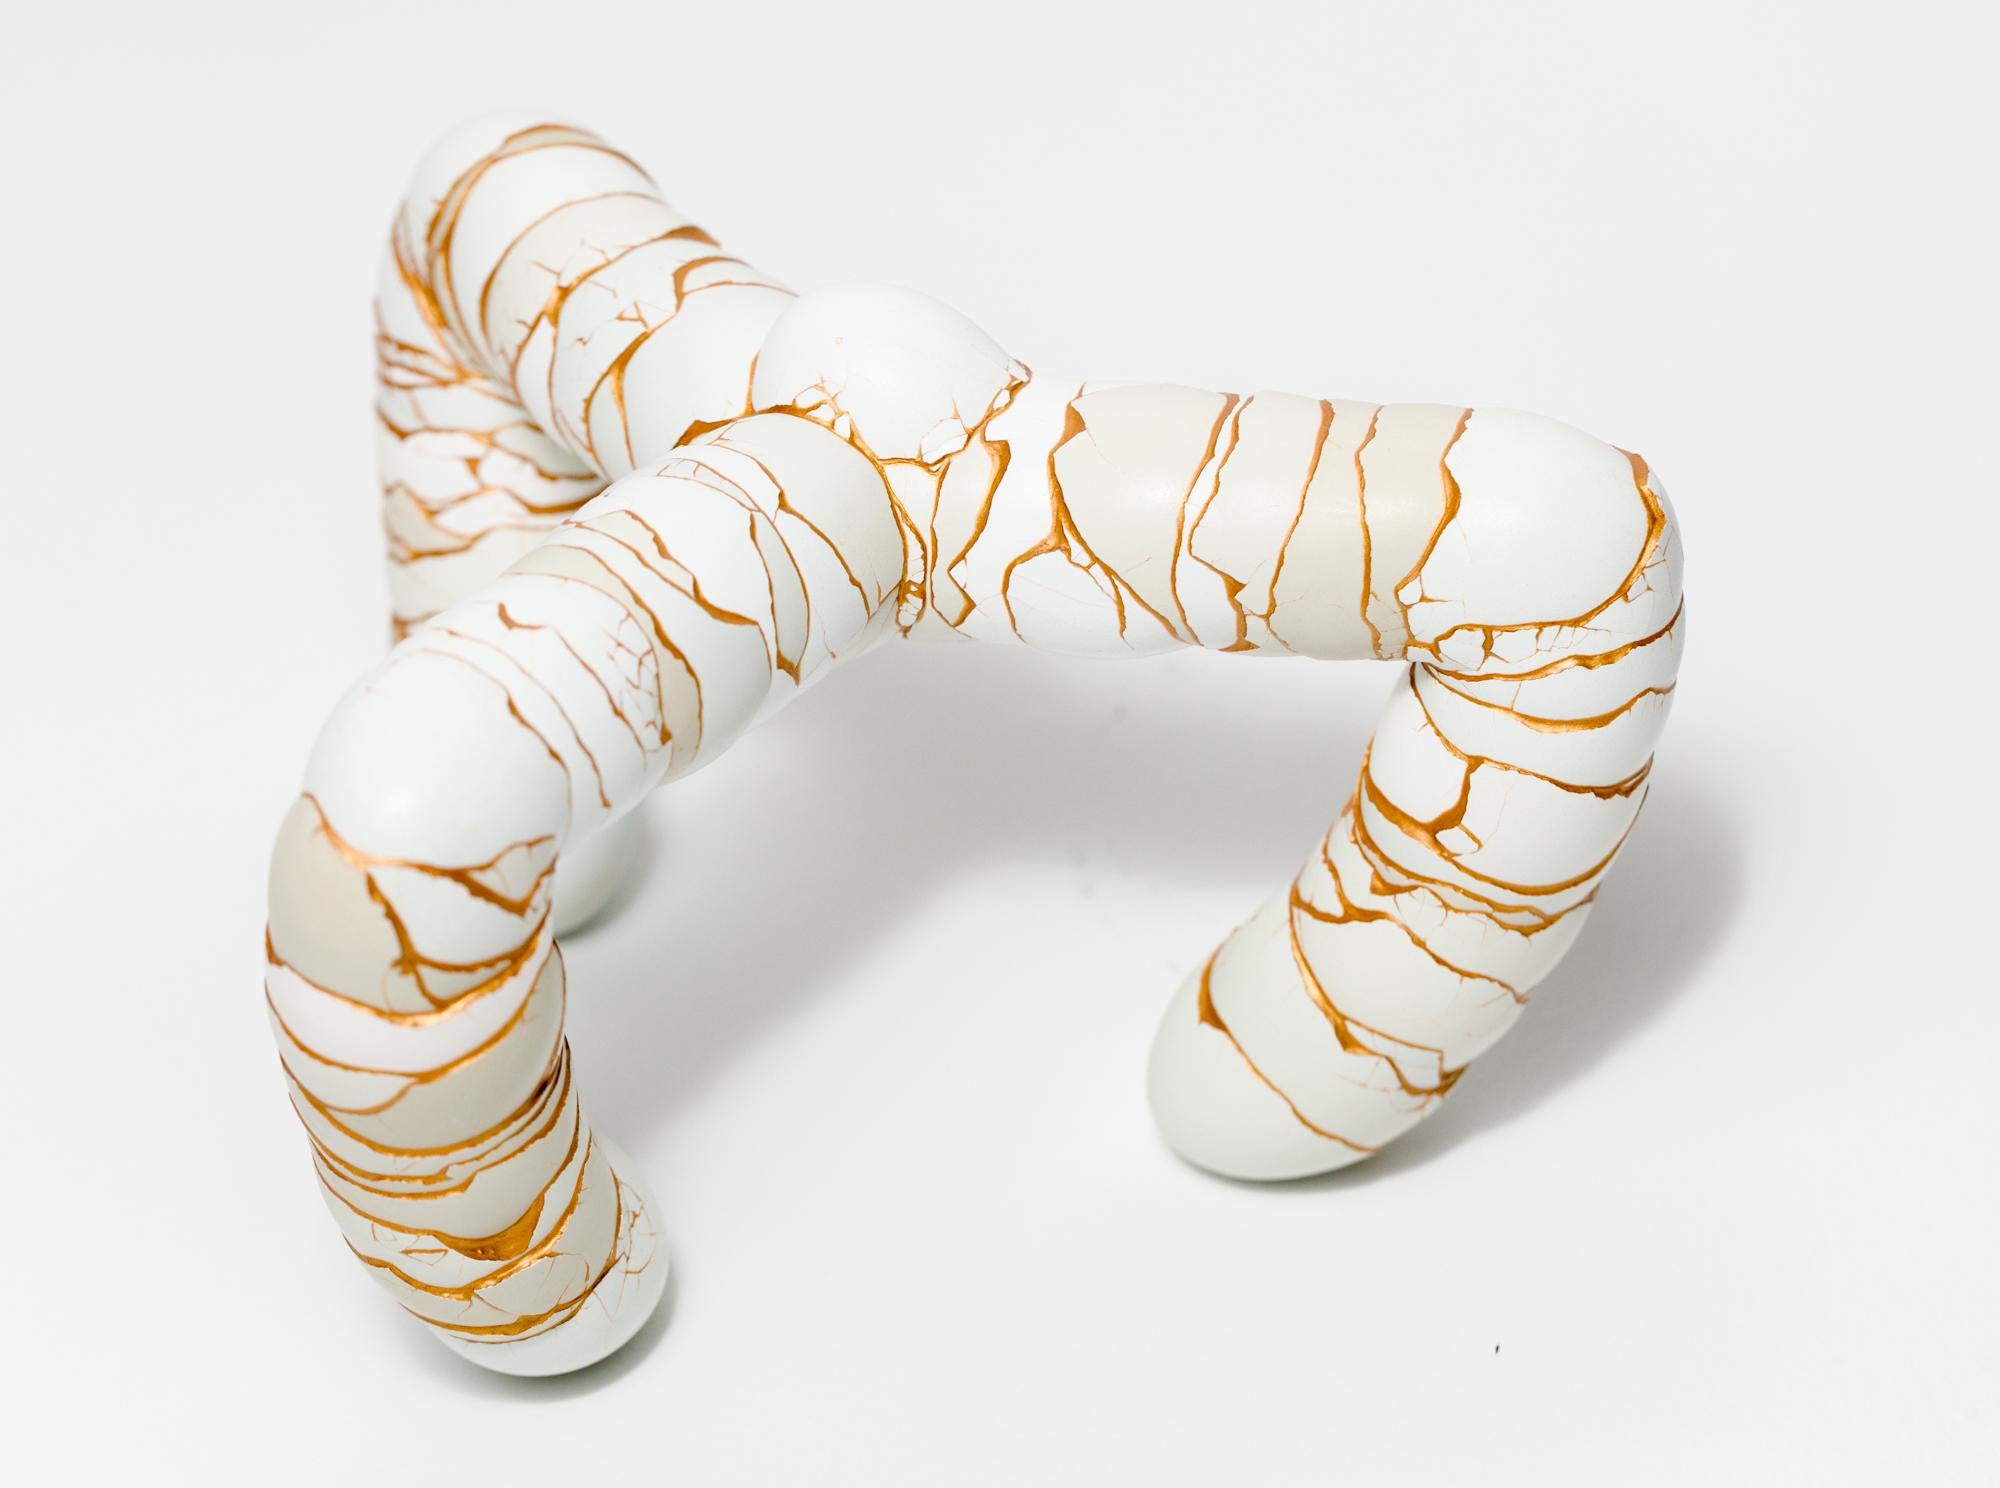 „Dreibein“, Reconstructed egg assemblage – Mixed Media Art von Katie VanVliet